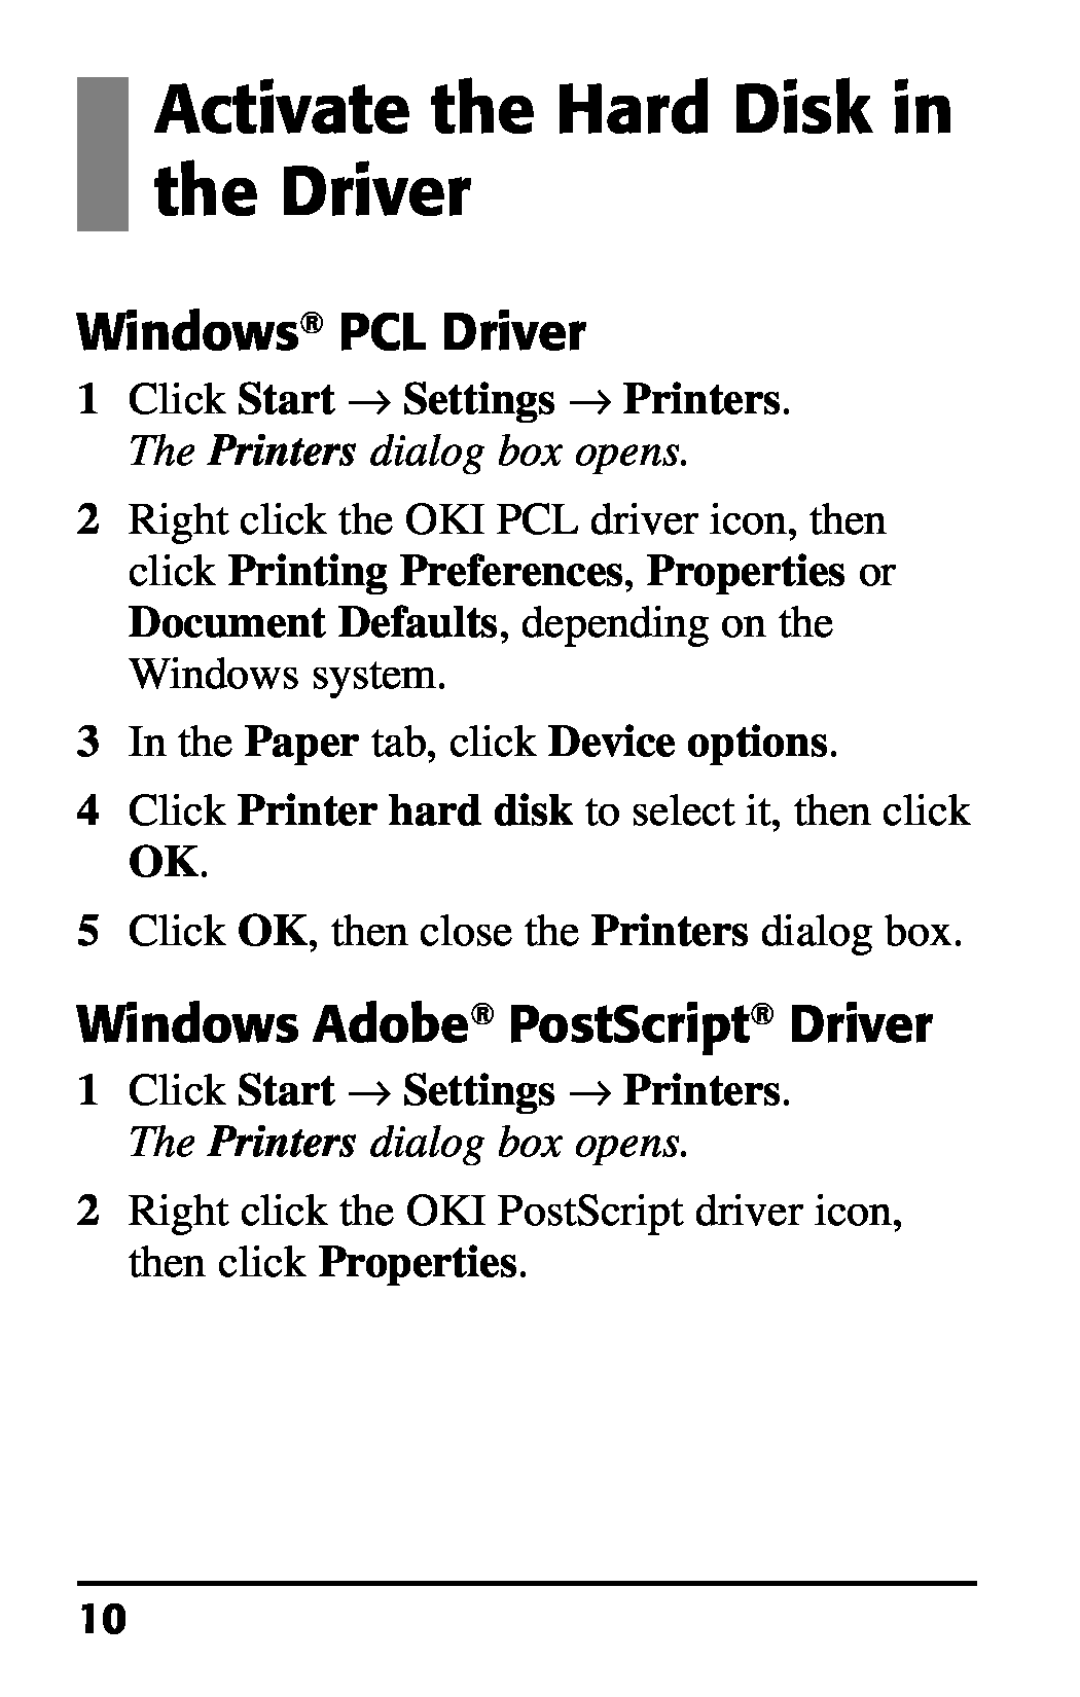 Oki 70037301 Activate the Hard Disk in the Driver, Windows PCL Driver, Windows Adobe PostScript Driver 